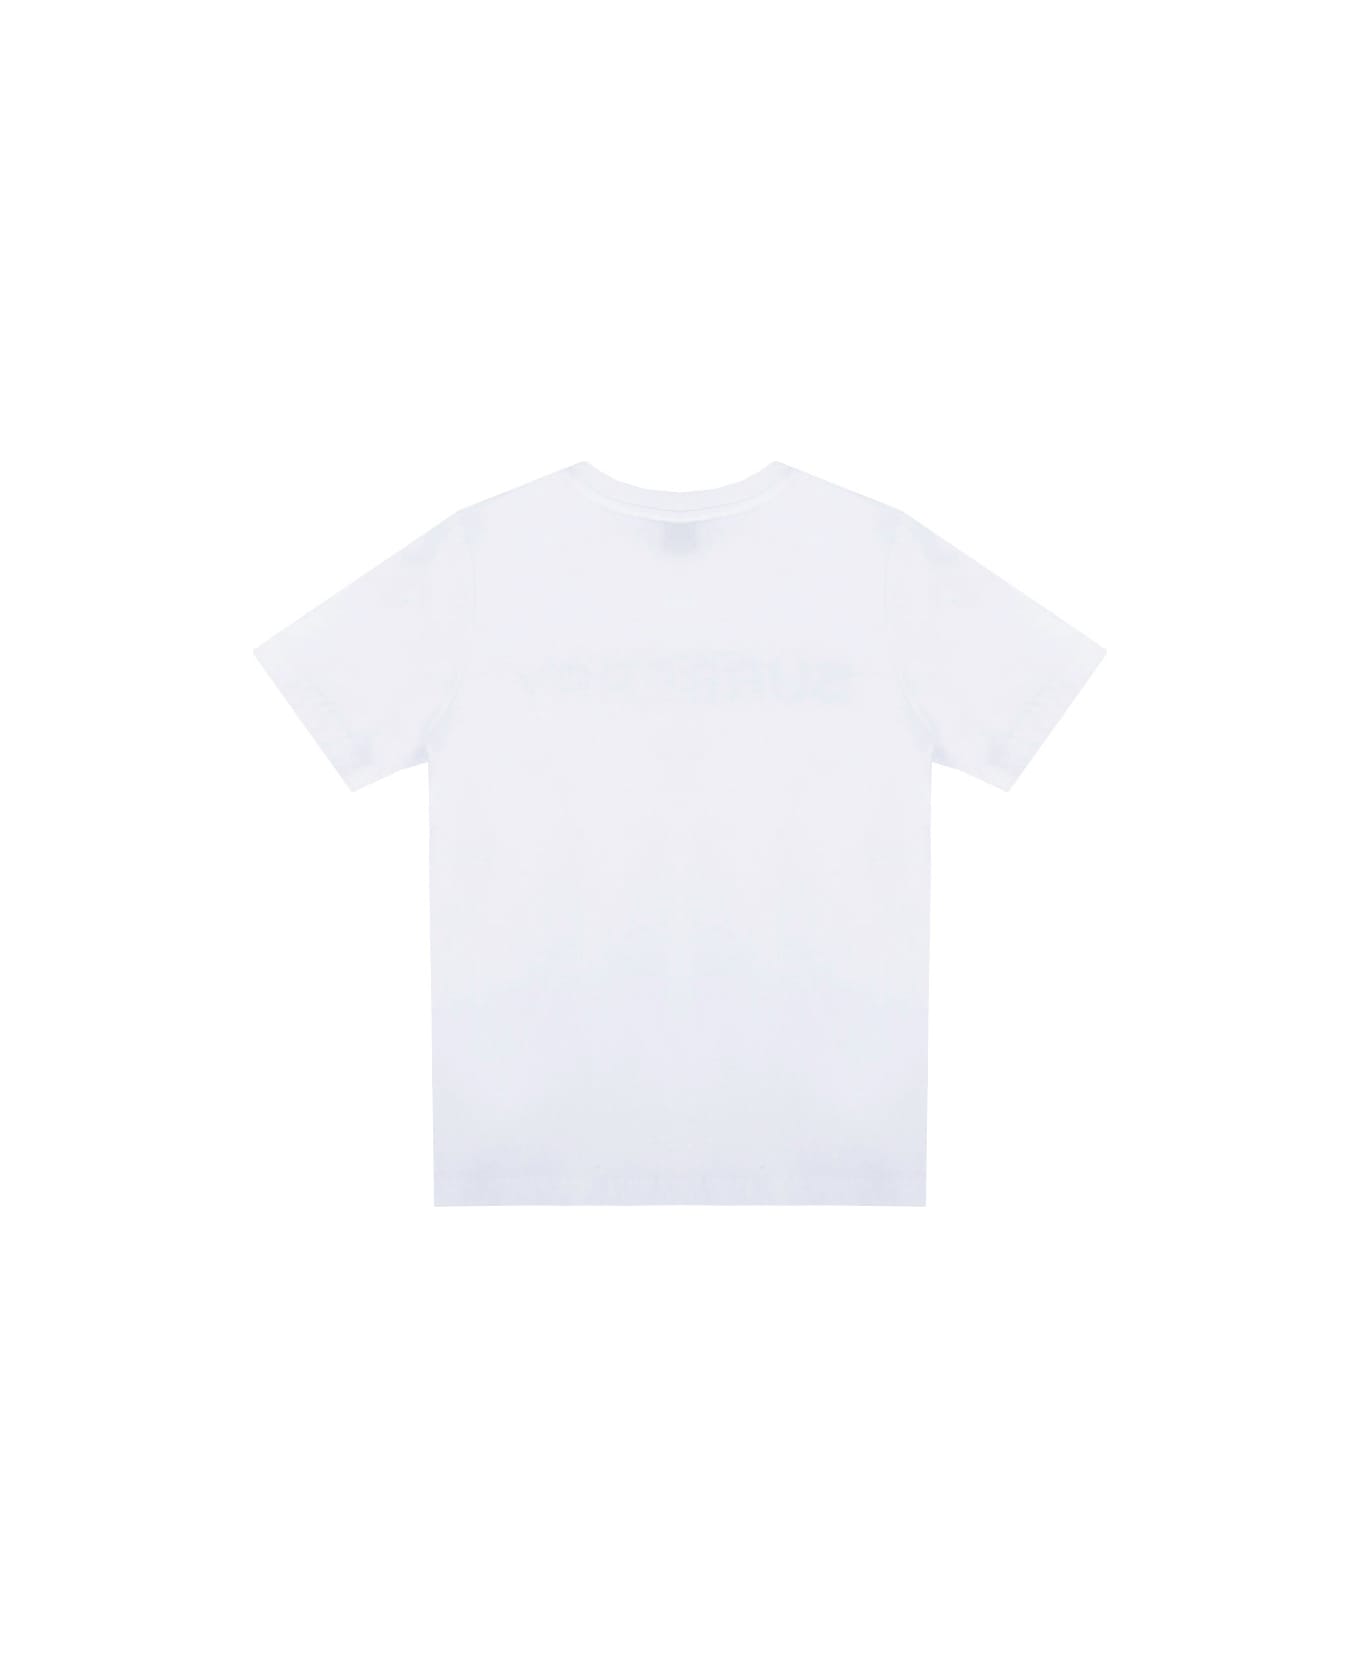 Burberry Bristle T-shirt For Boys - White